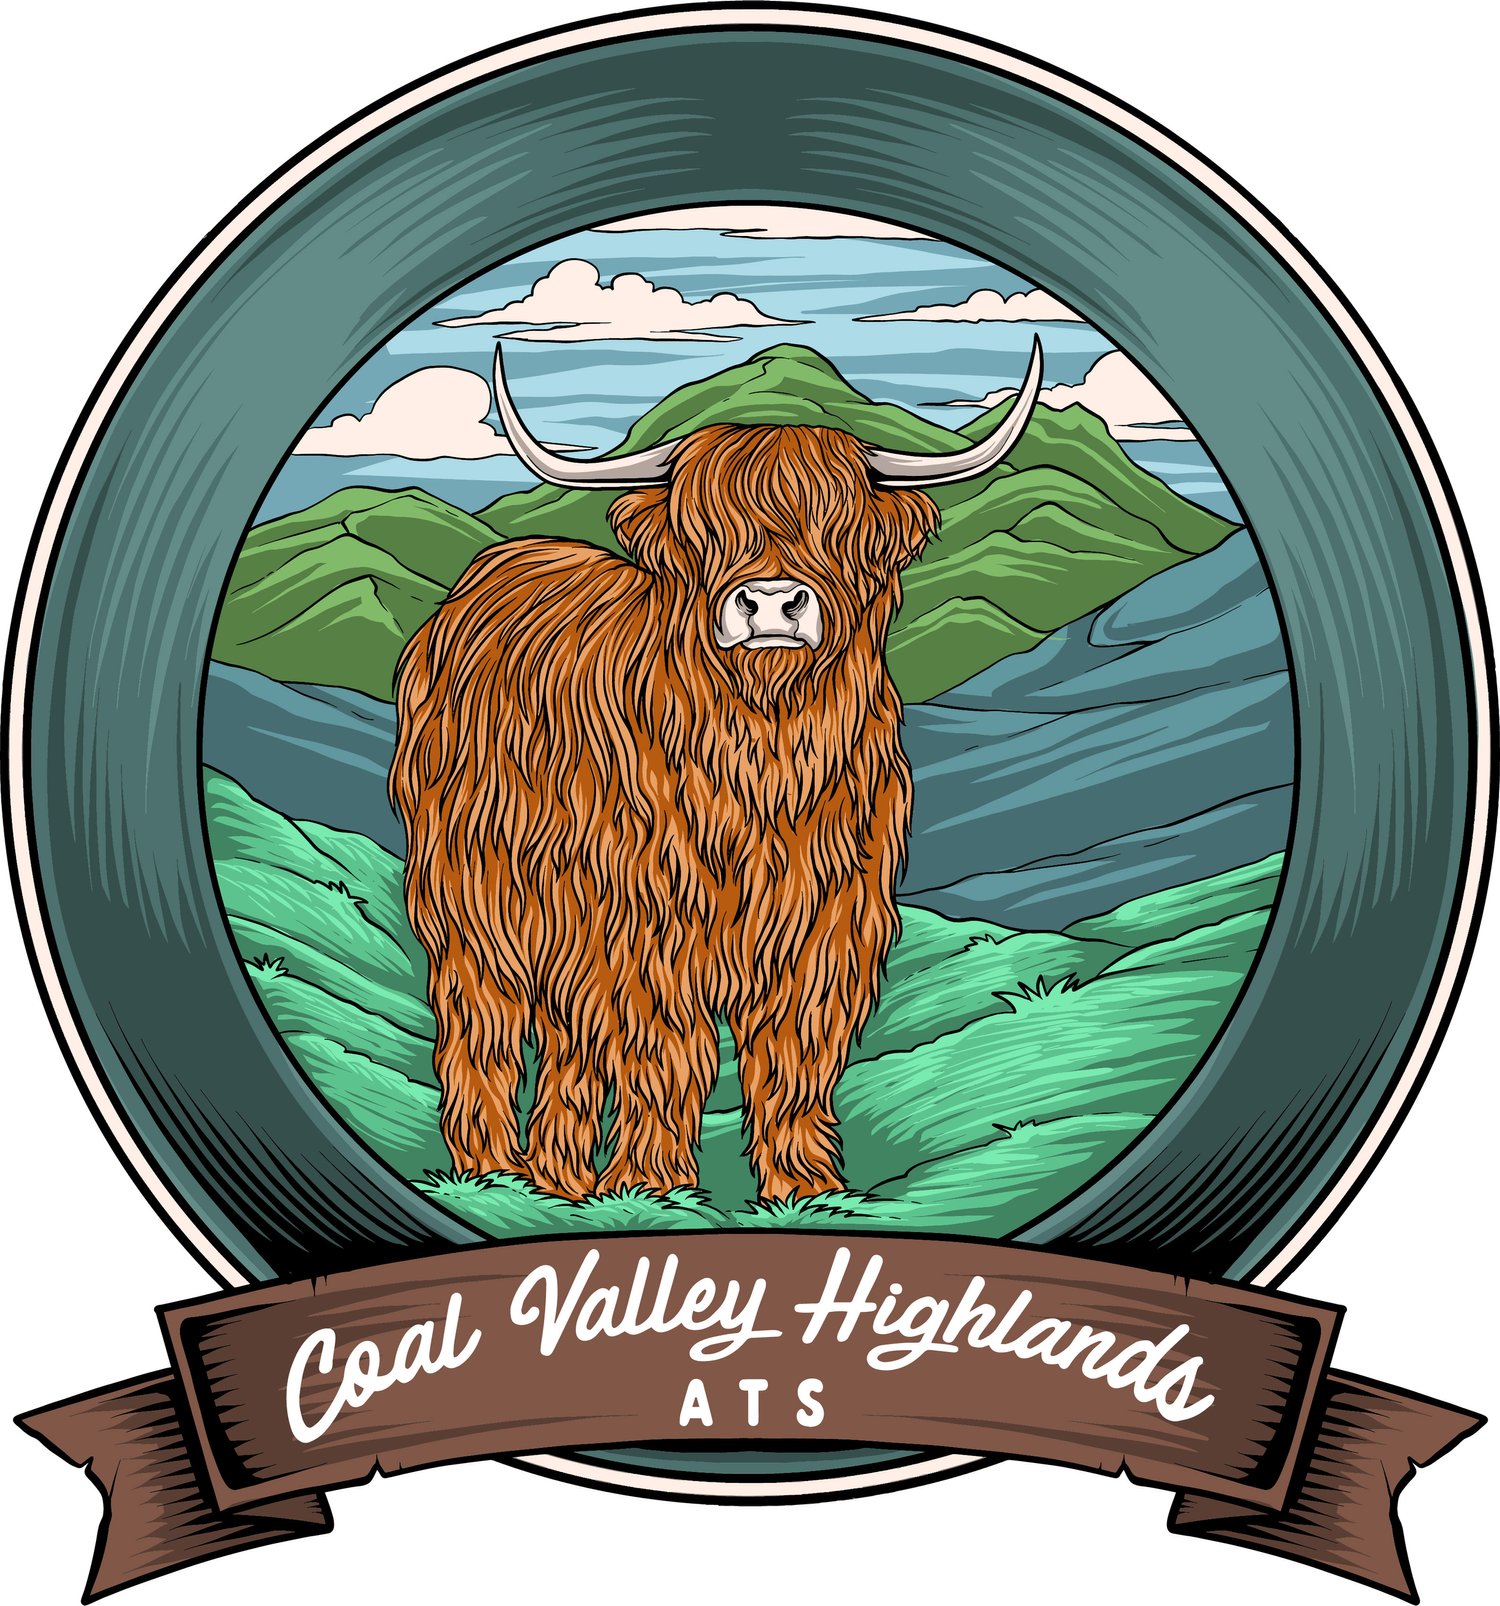 Coal Valley Highlands